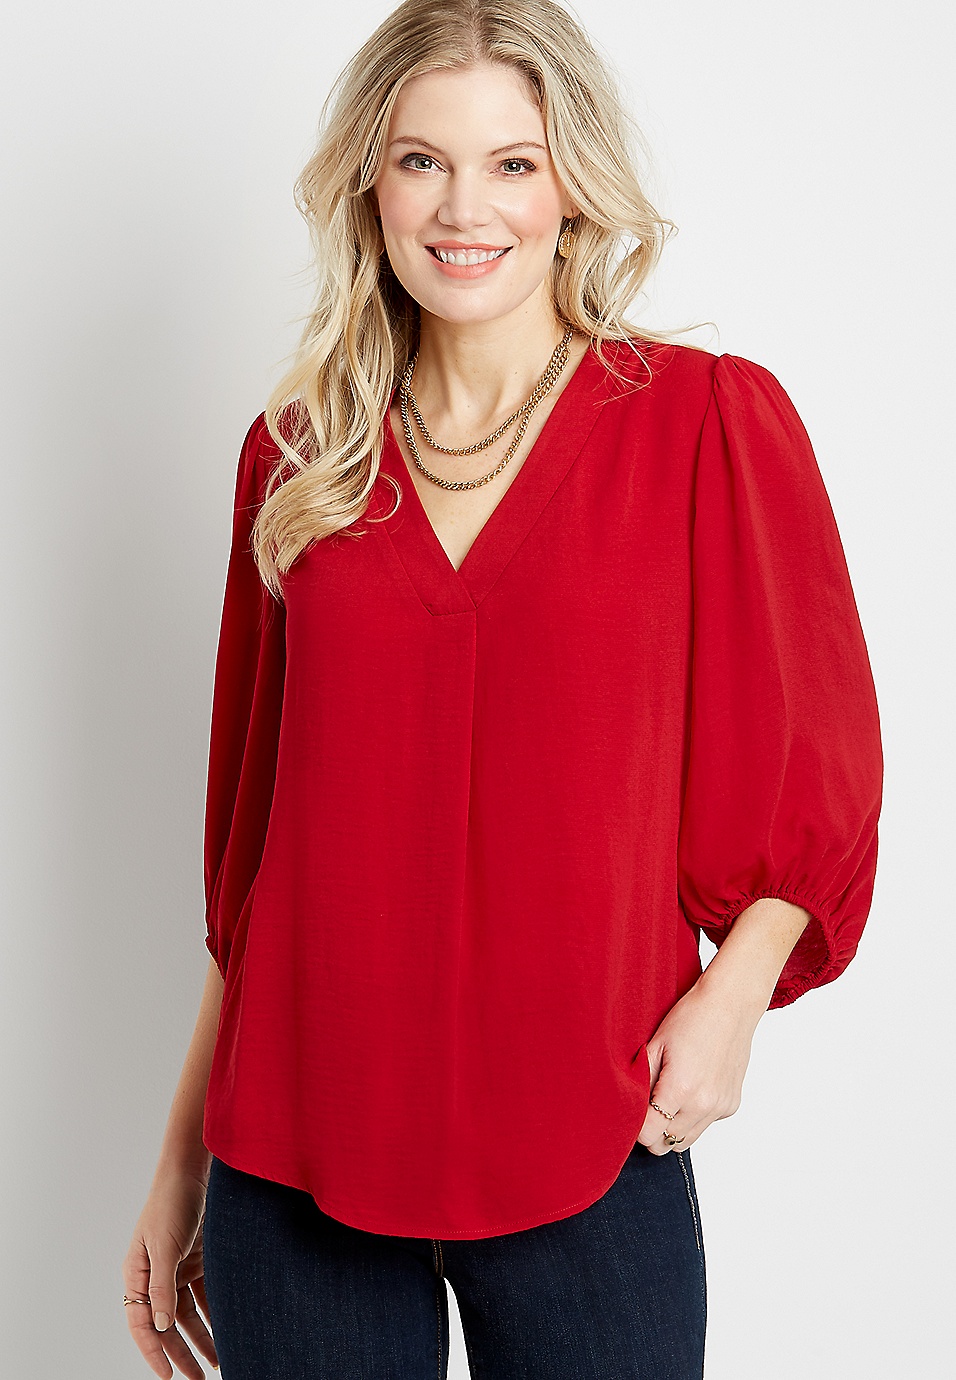 Maurices Women's Homeward Colorblock Fleece Hoodie Red Size Medium